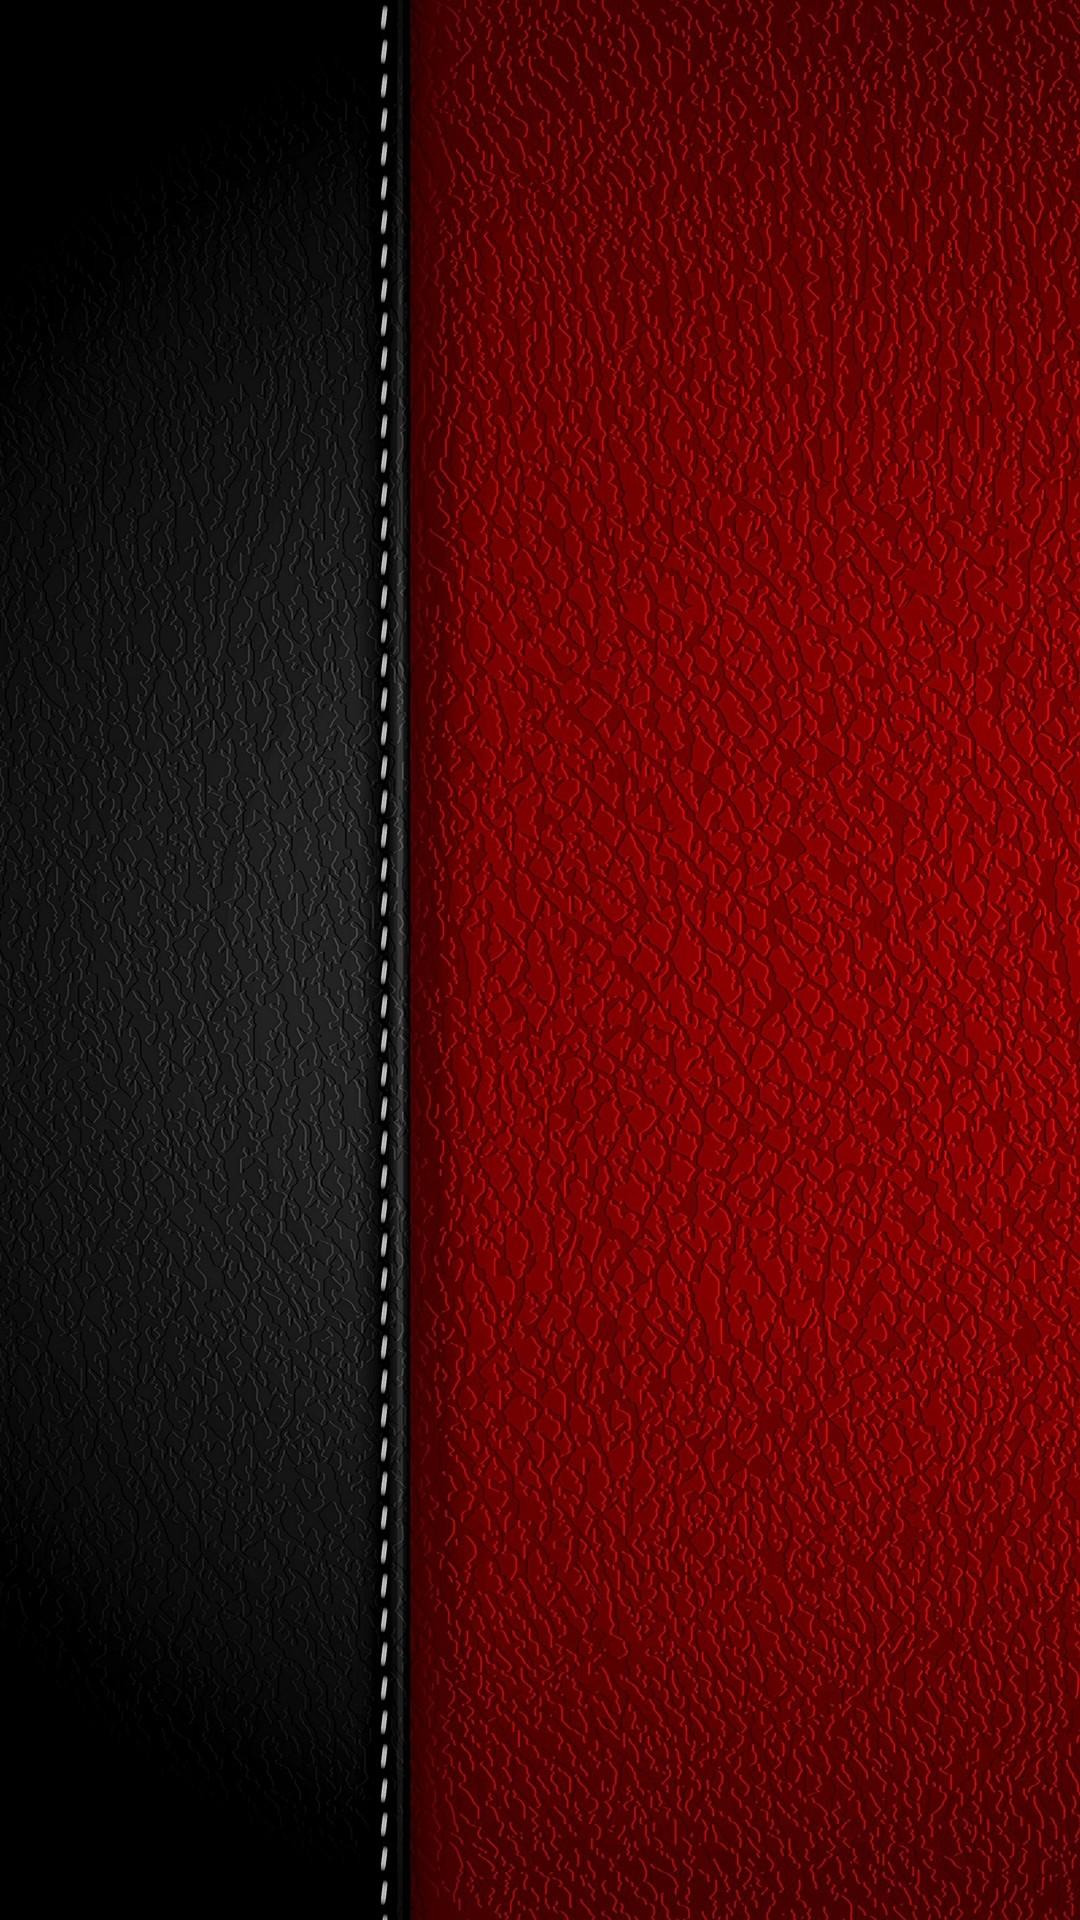 Red 4k Phone Wallpapers - Wallpaper Cave